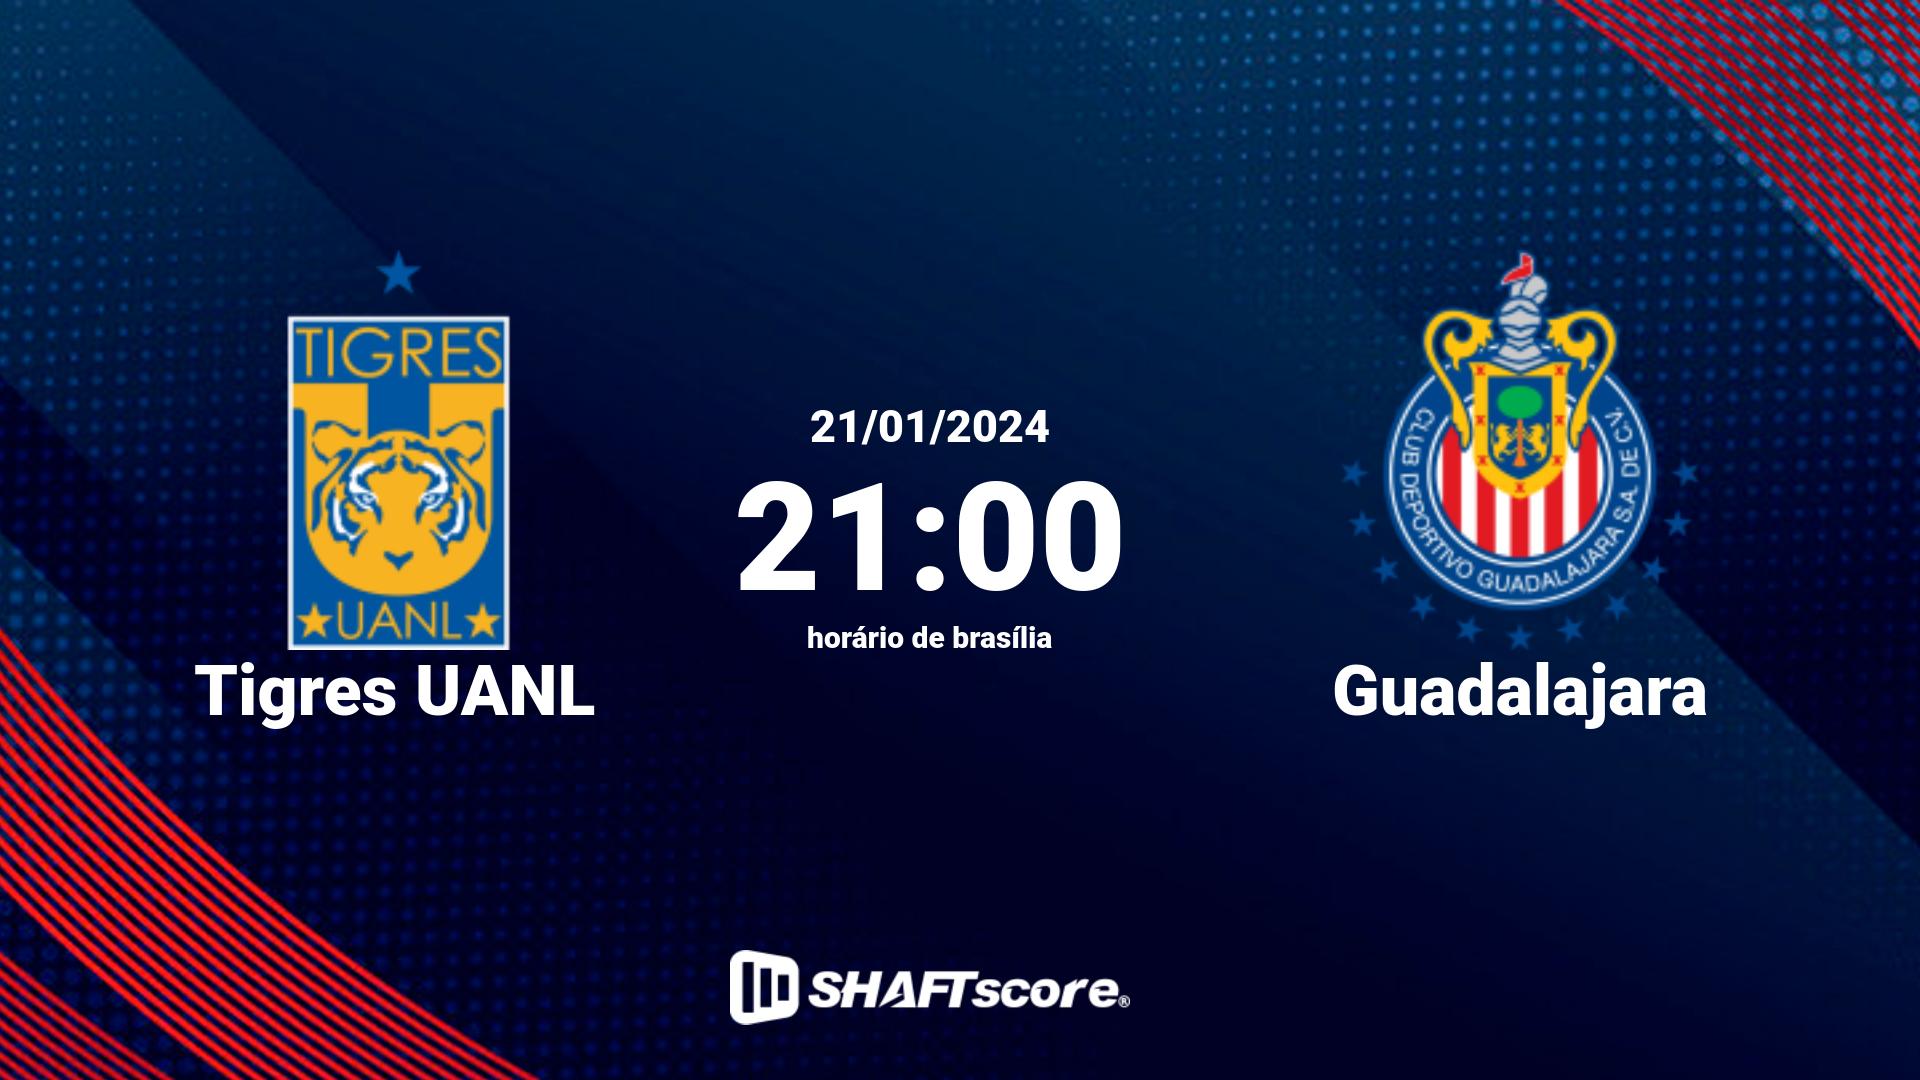 Estatísticas do jogo Tigres UANL vs Guadalajara 21.01 21:00